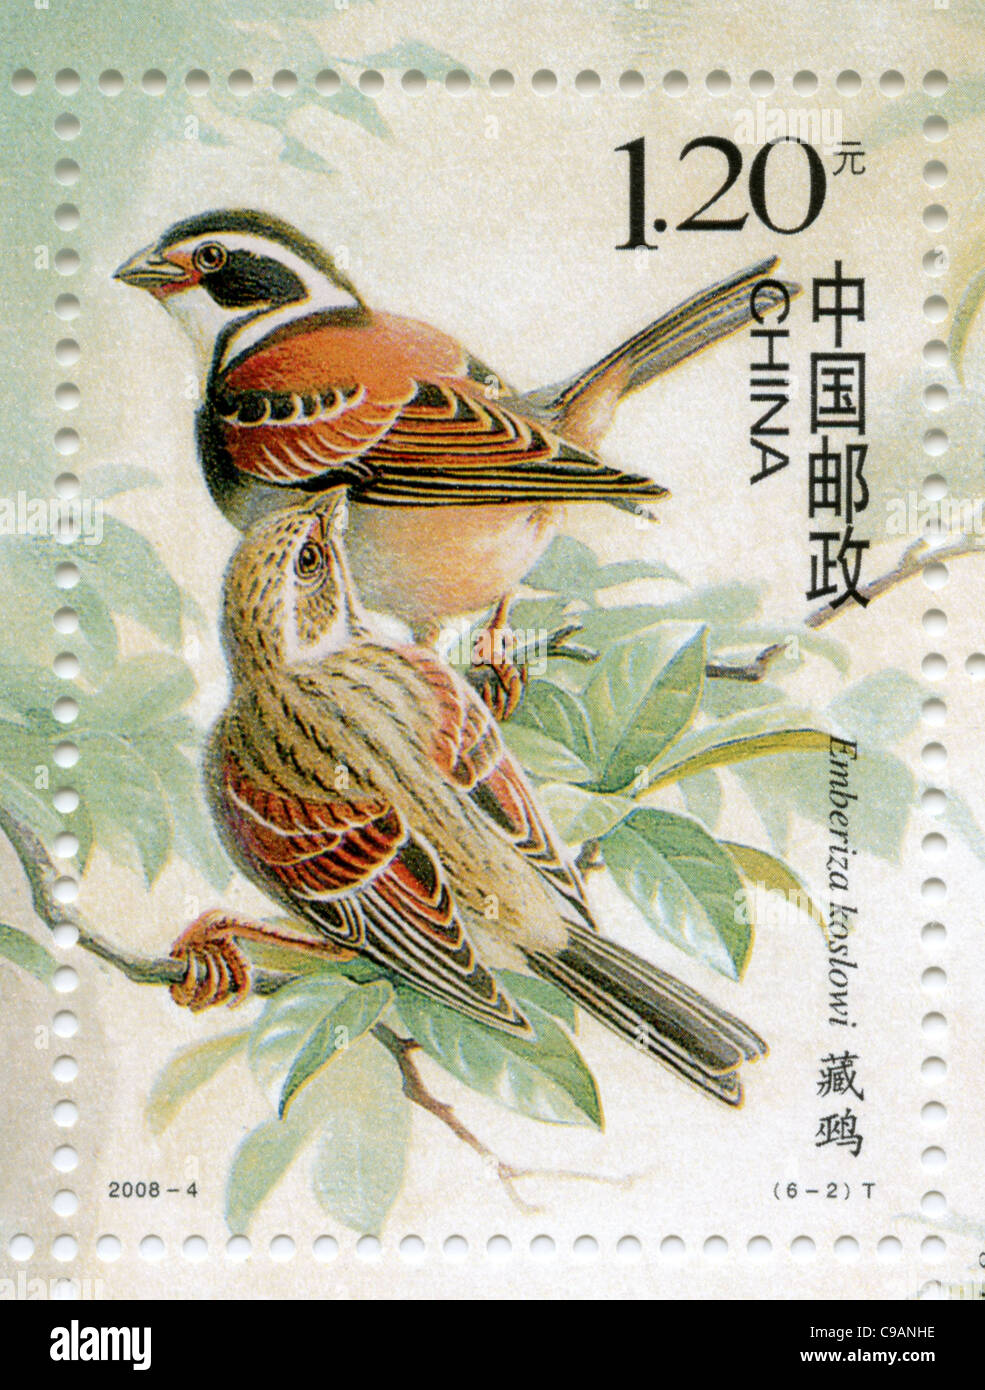 China postage stamp - The Tibetan Bunting - Emberiza koslowi Stock Photo